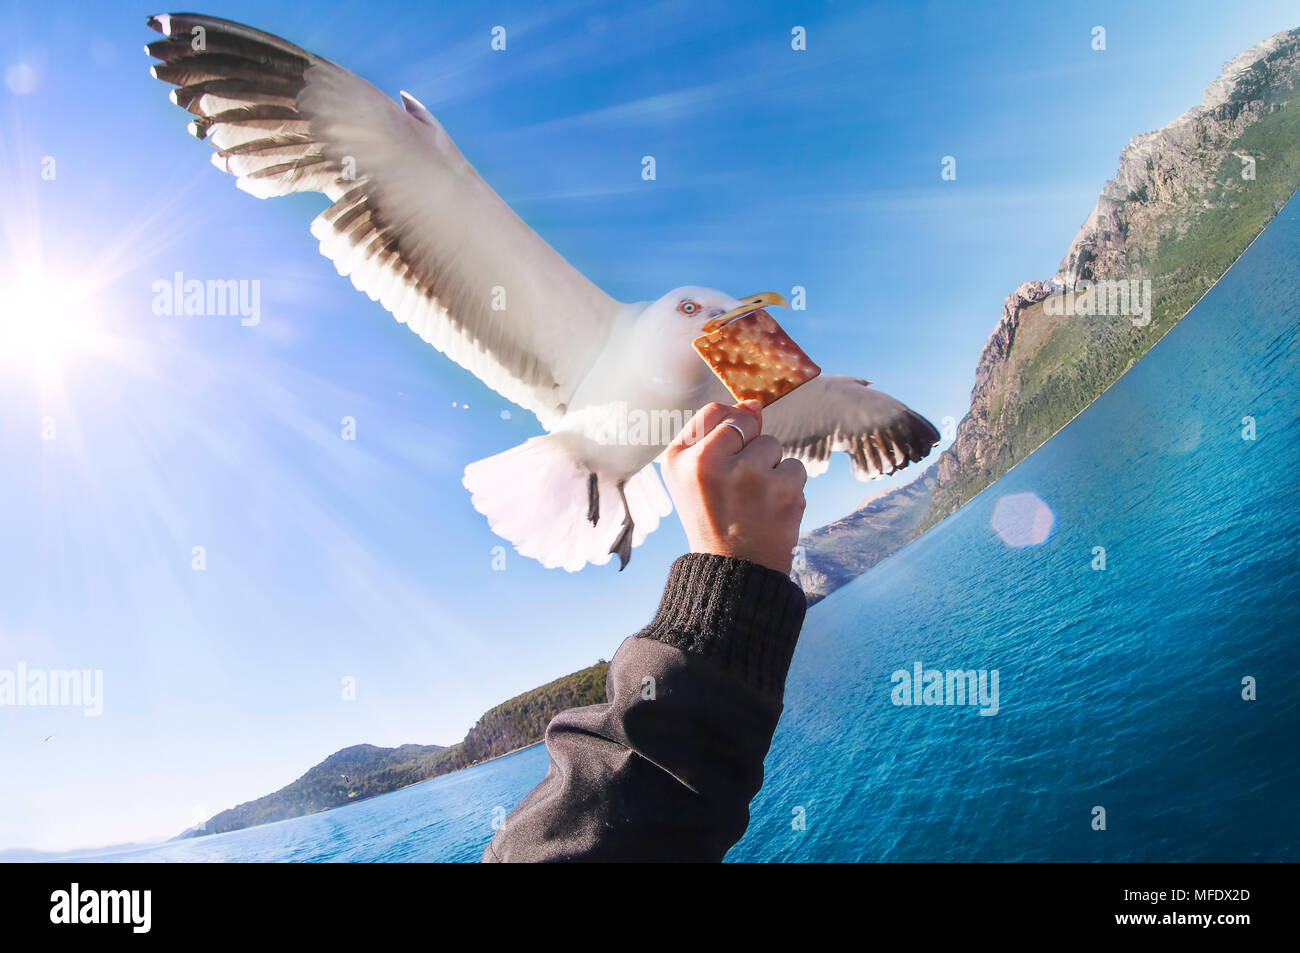 Seagull Stock Photo